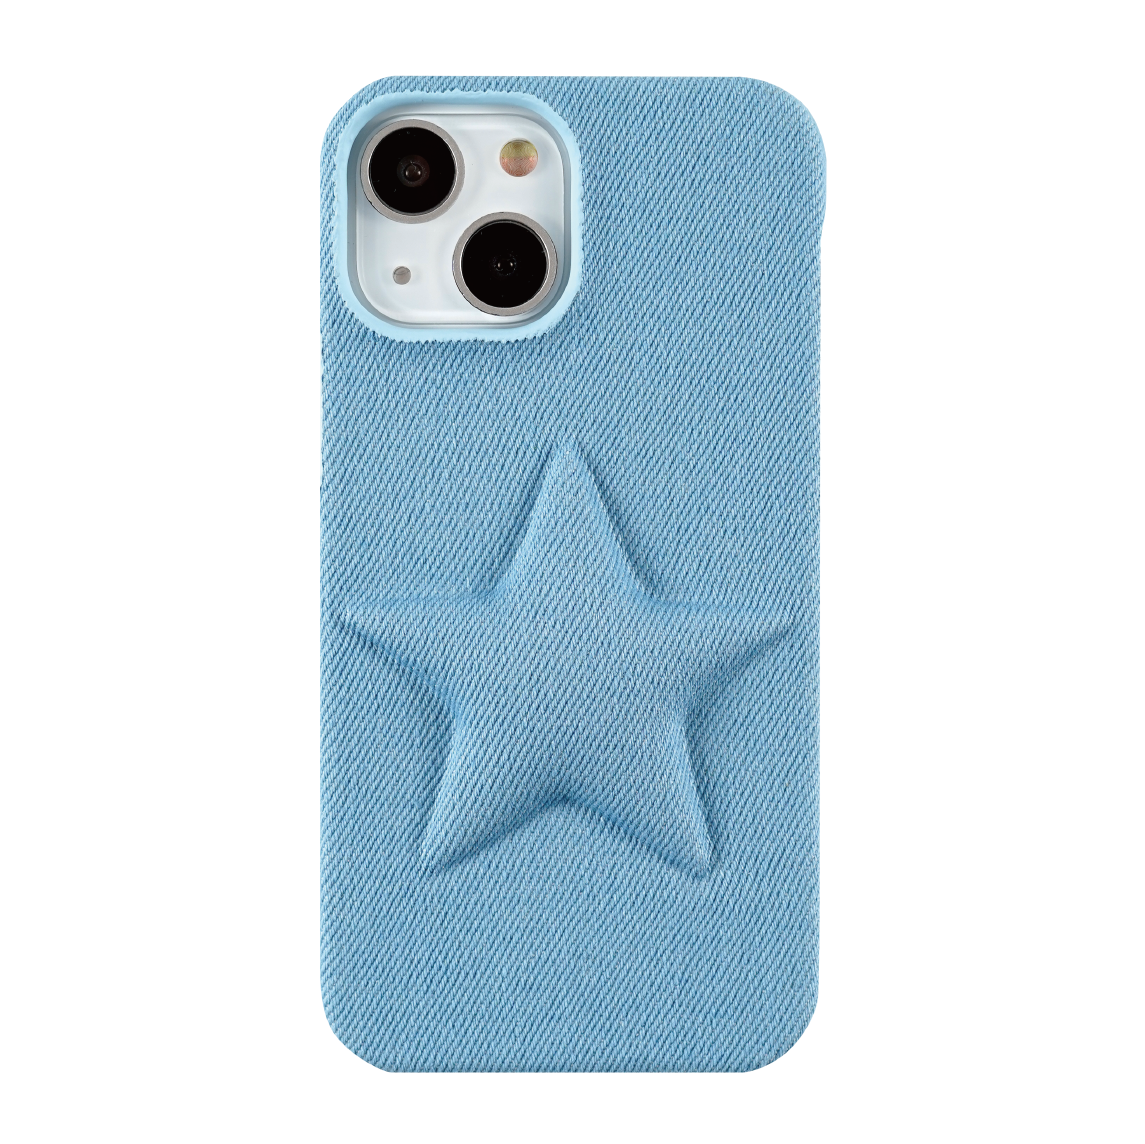 Star cushion case (light blue)